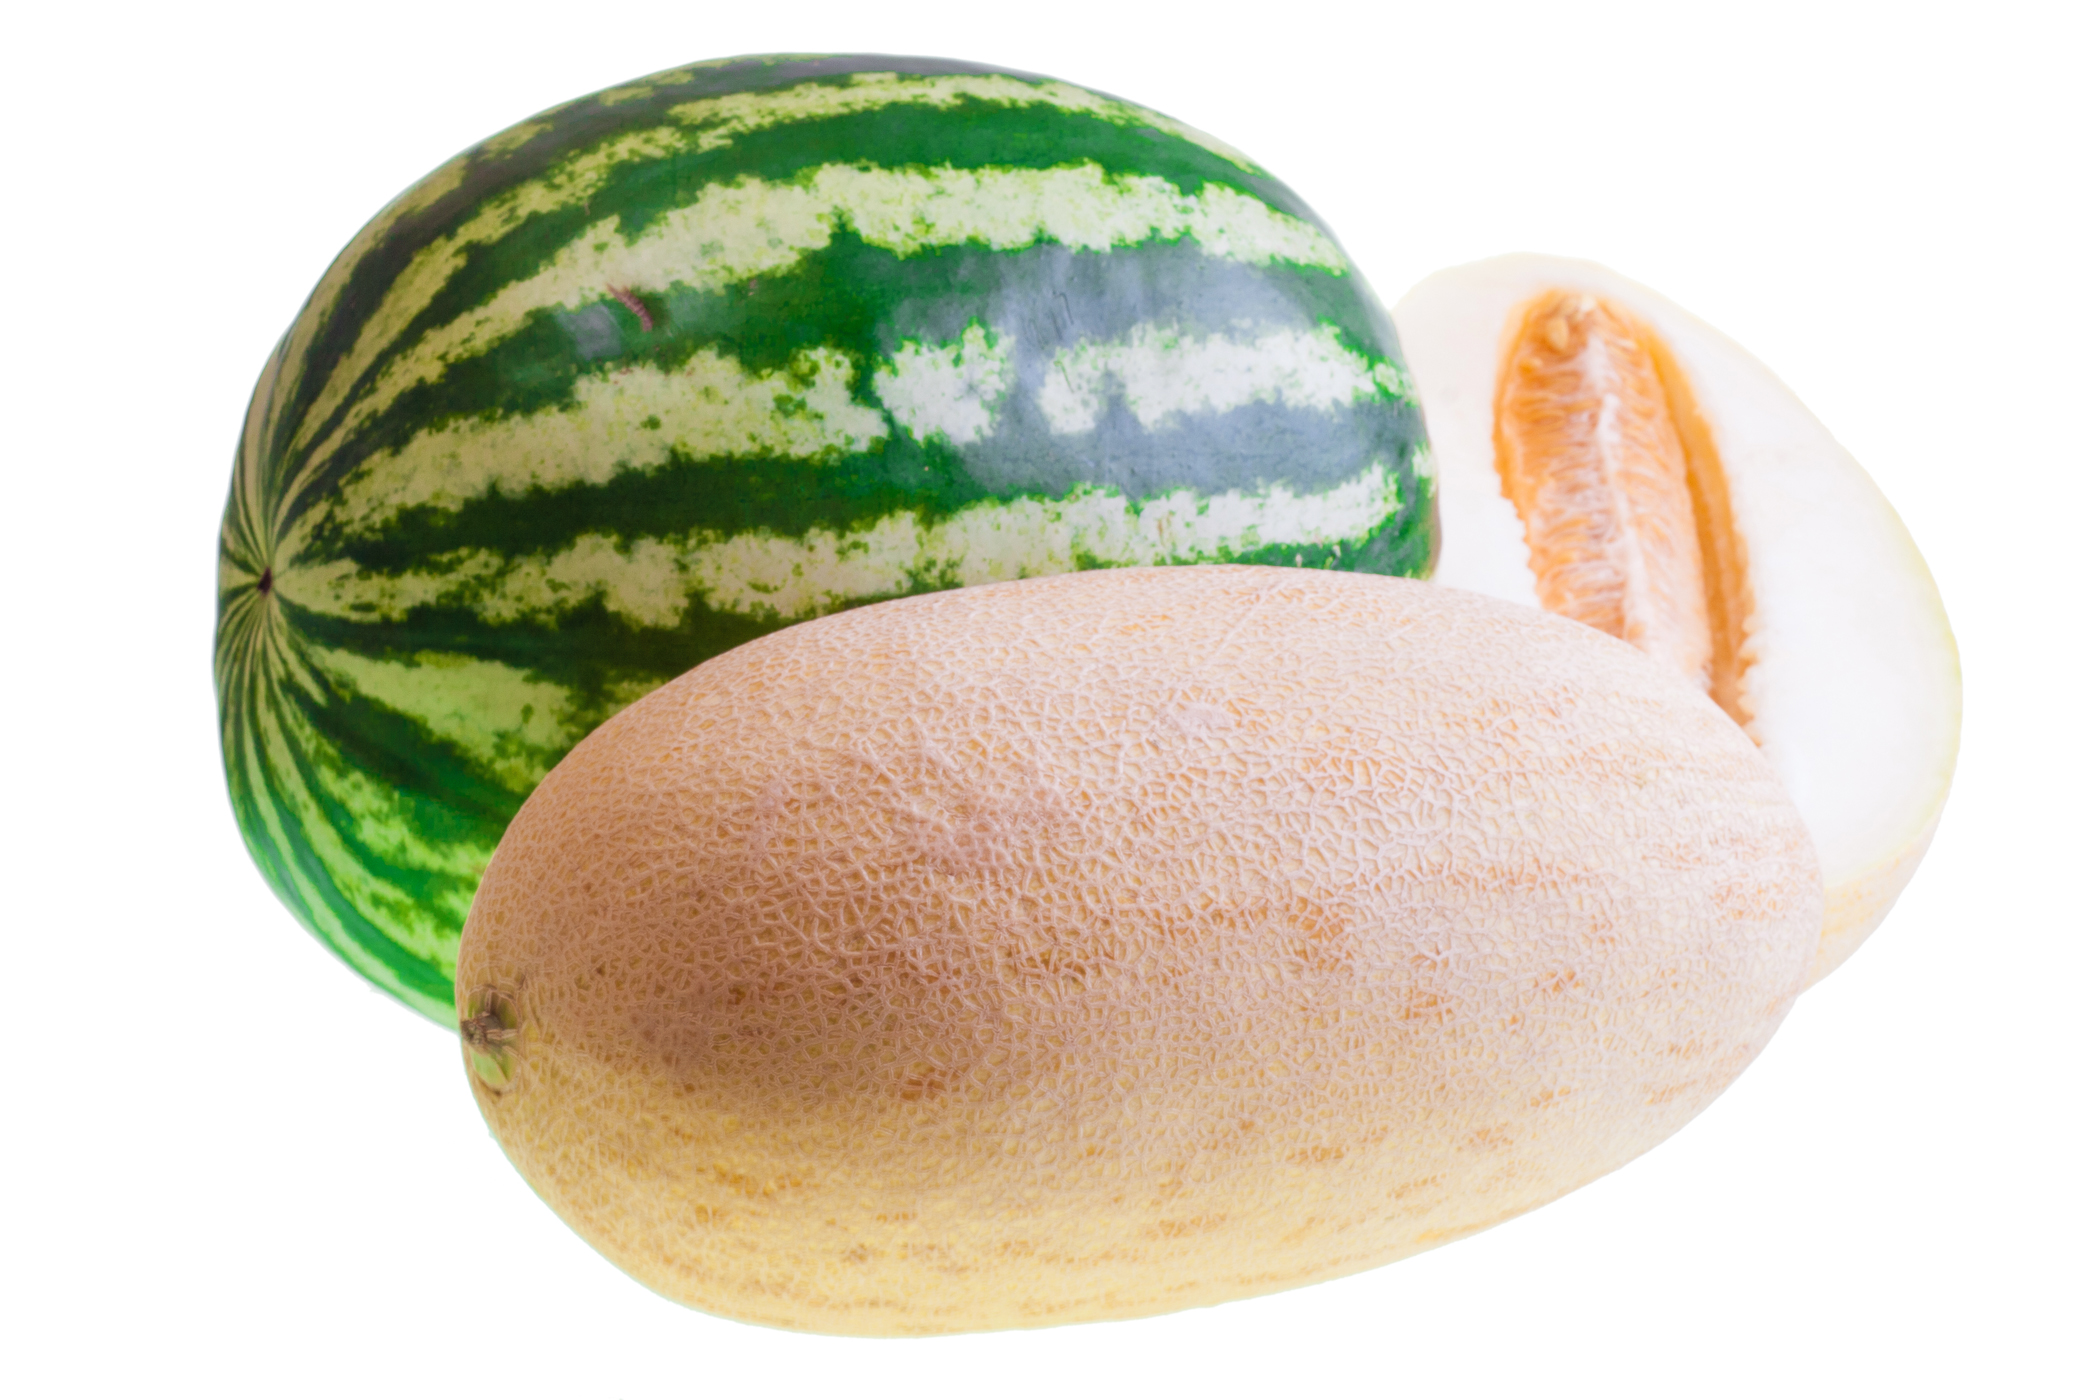 Melon and watermelon photo